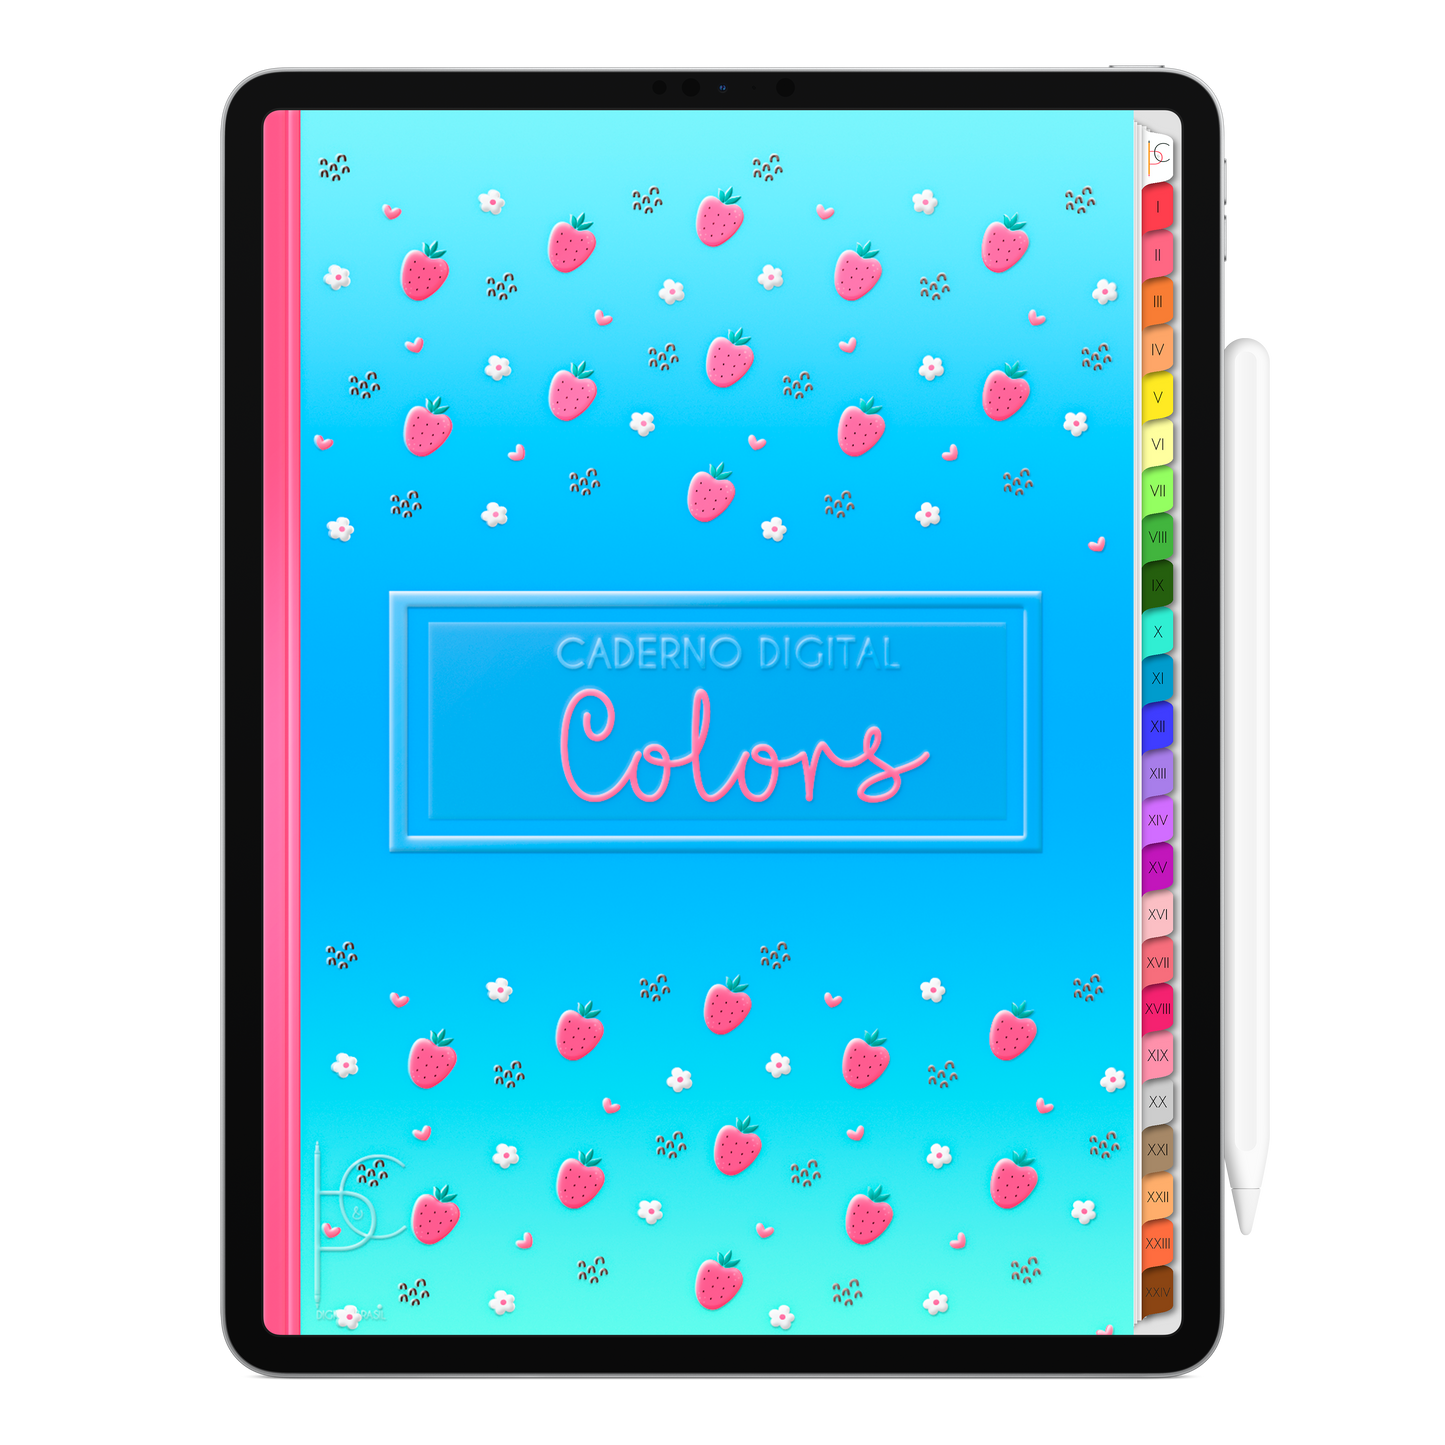 Caderno Digital Colors 24 Matérias Strawberry and Flowers • Para iPad e Tablet Android • Download instantâneo